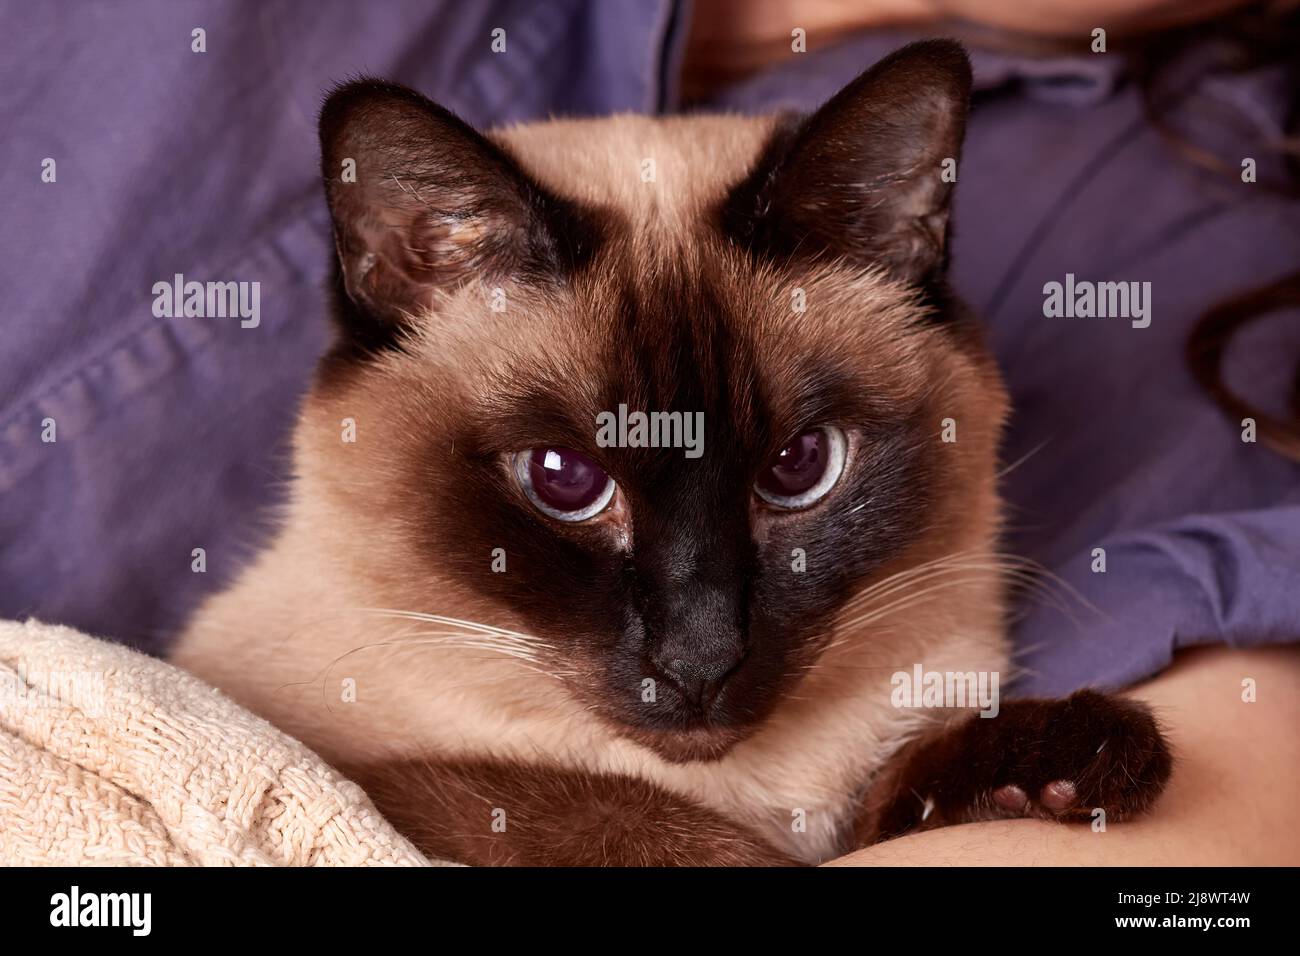 Un retrato divertido de un gato tailandés doméstico con grandes ojos azules. Foto de stock